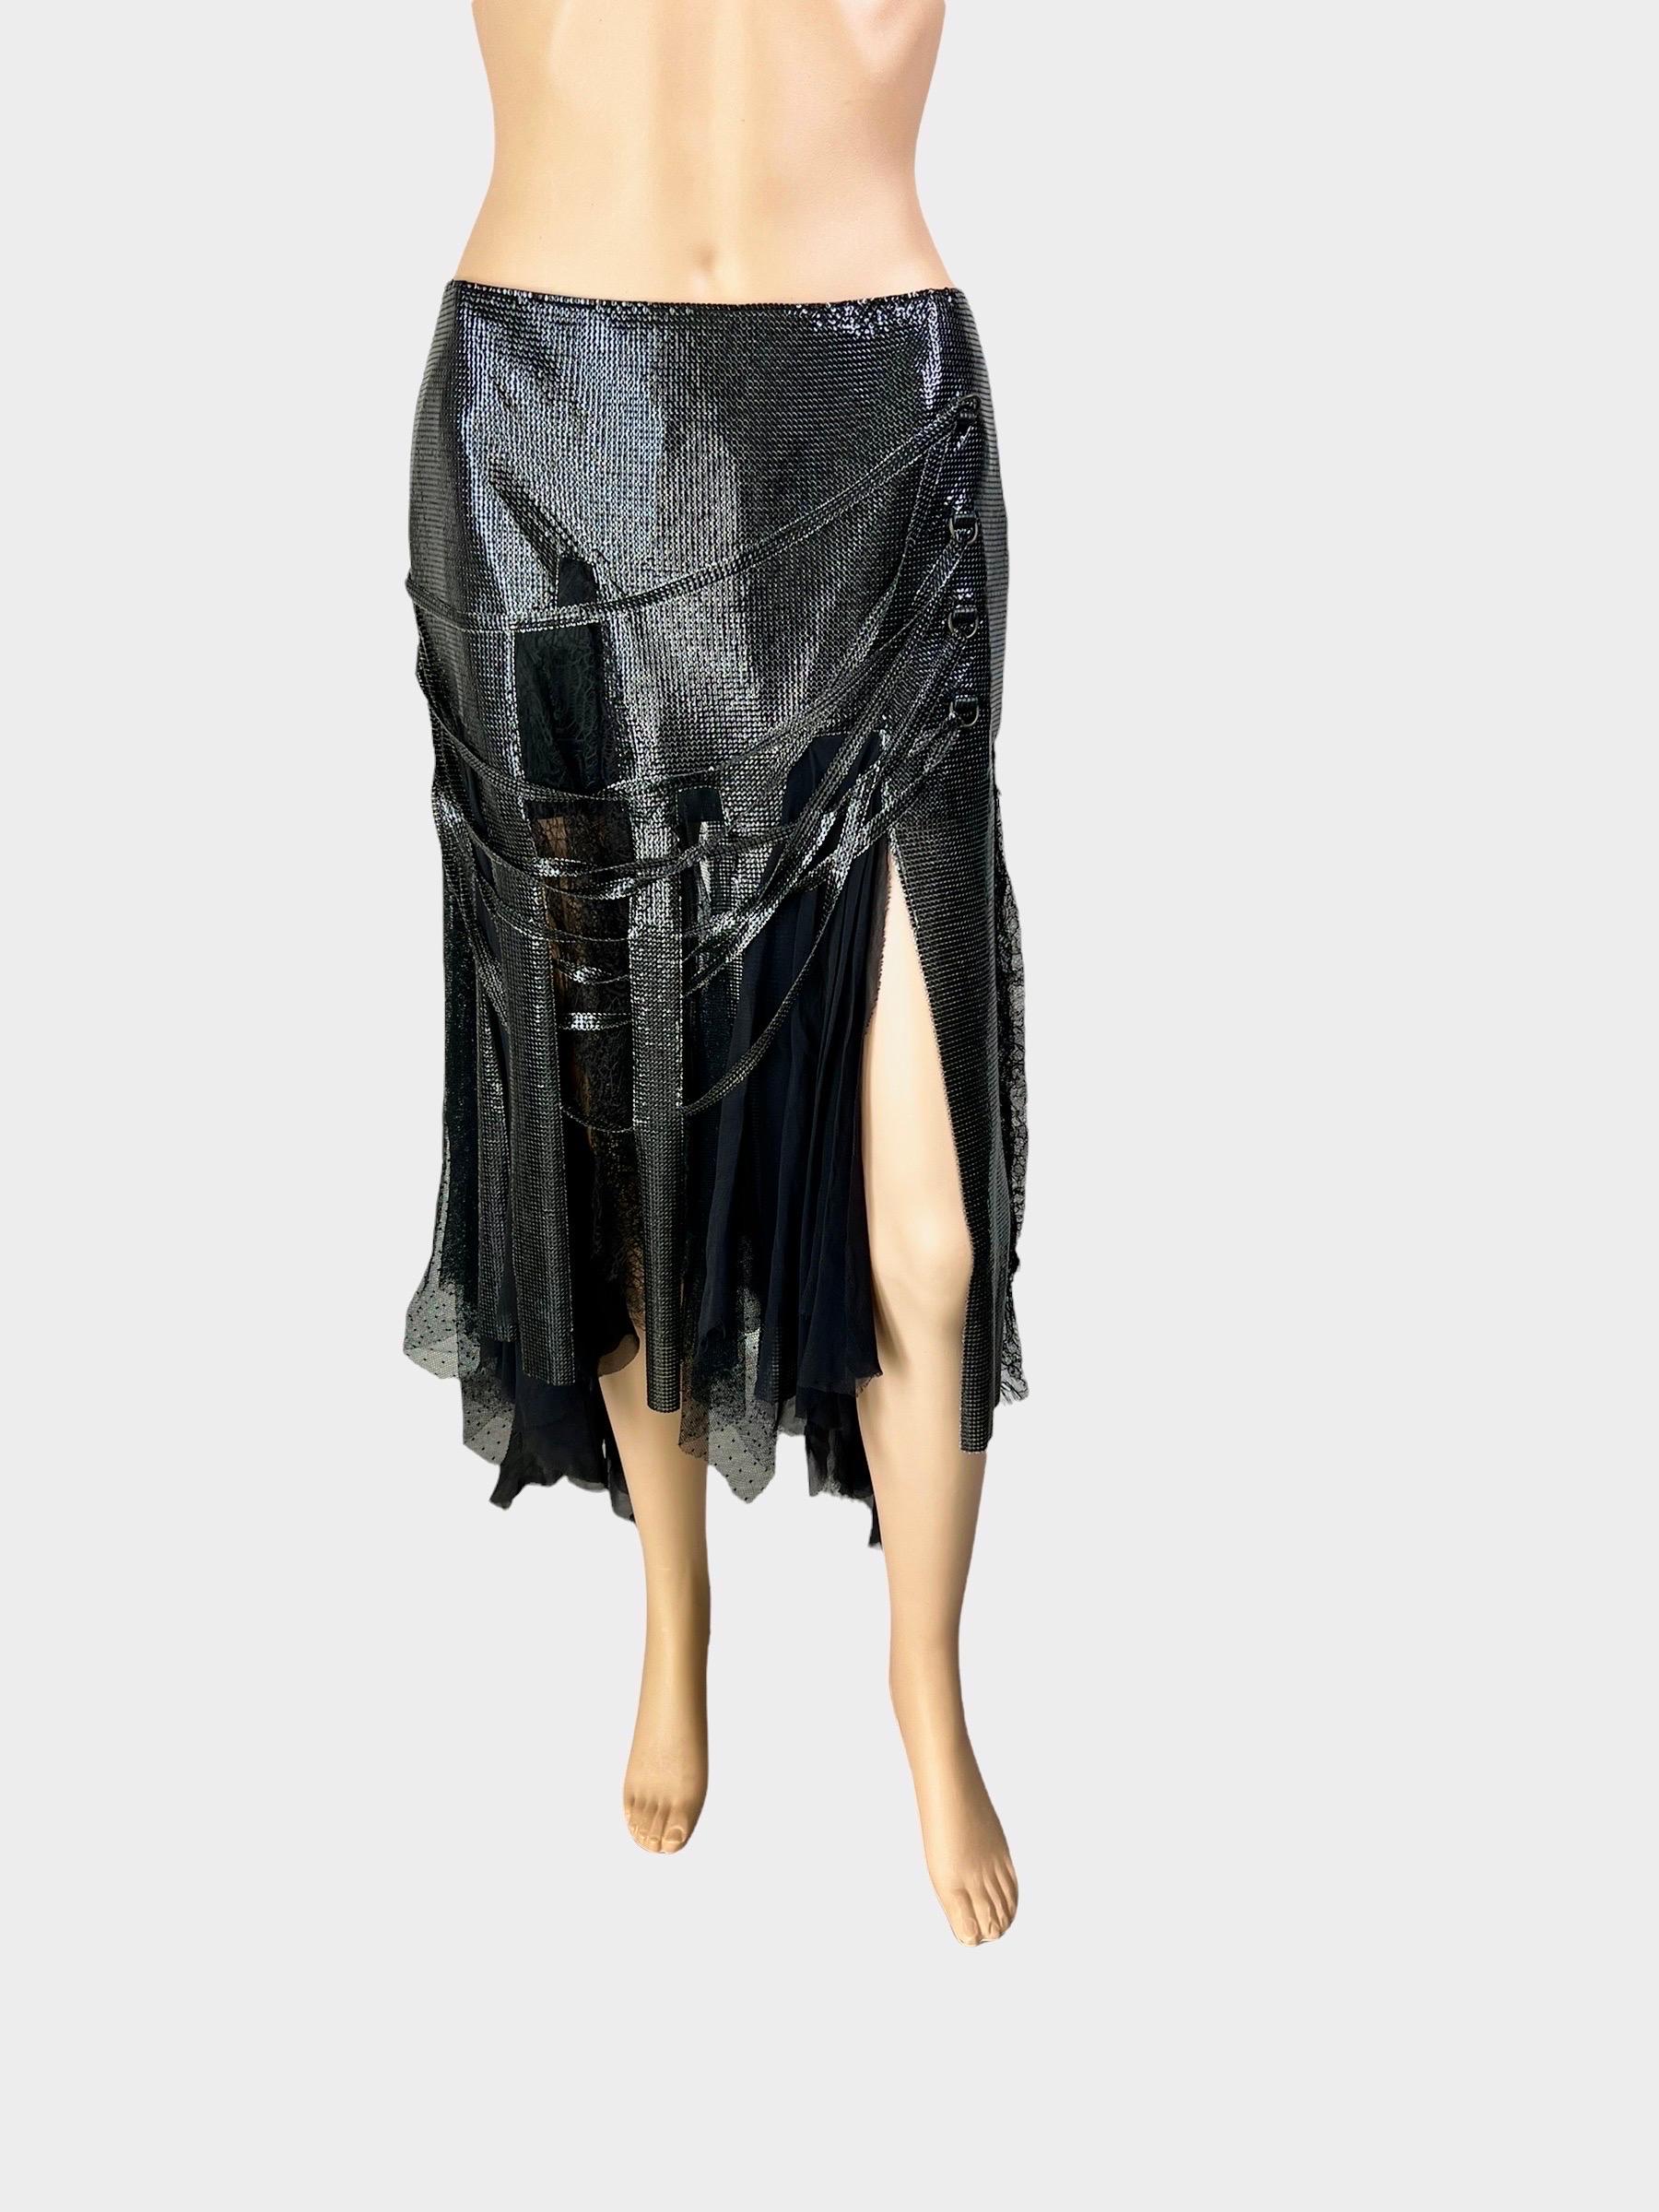 Versace F/W 2003 Runway Oroton Metal Mesh Chainmail Black Asymmetric Skirt  For Sale 1